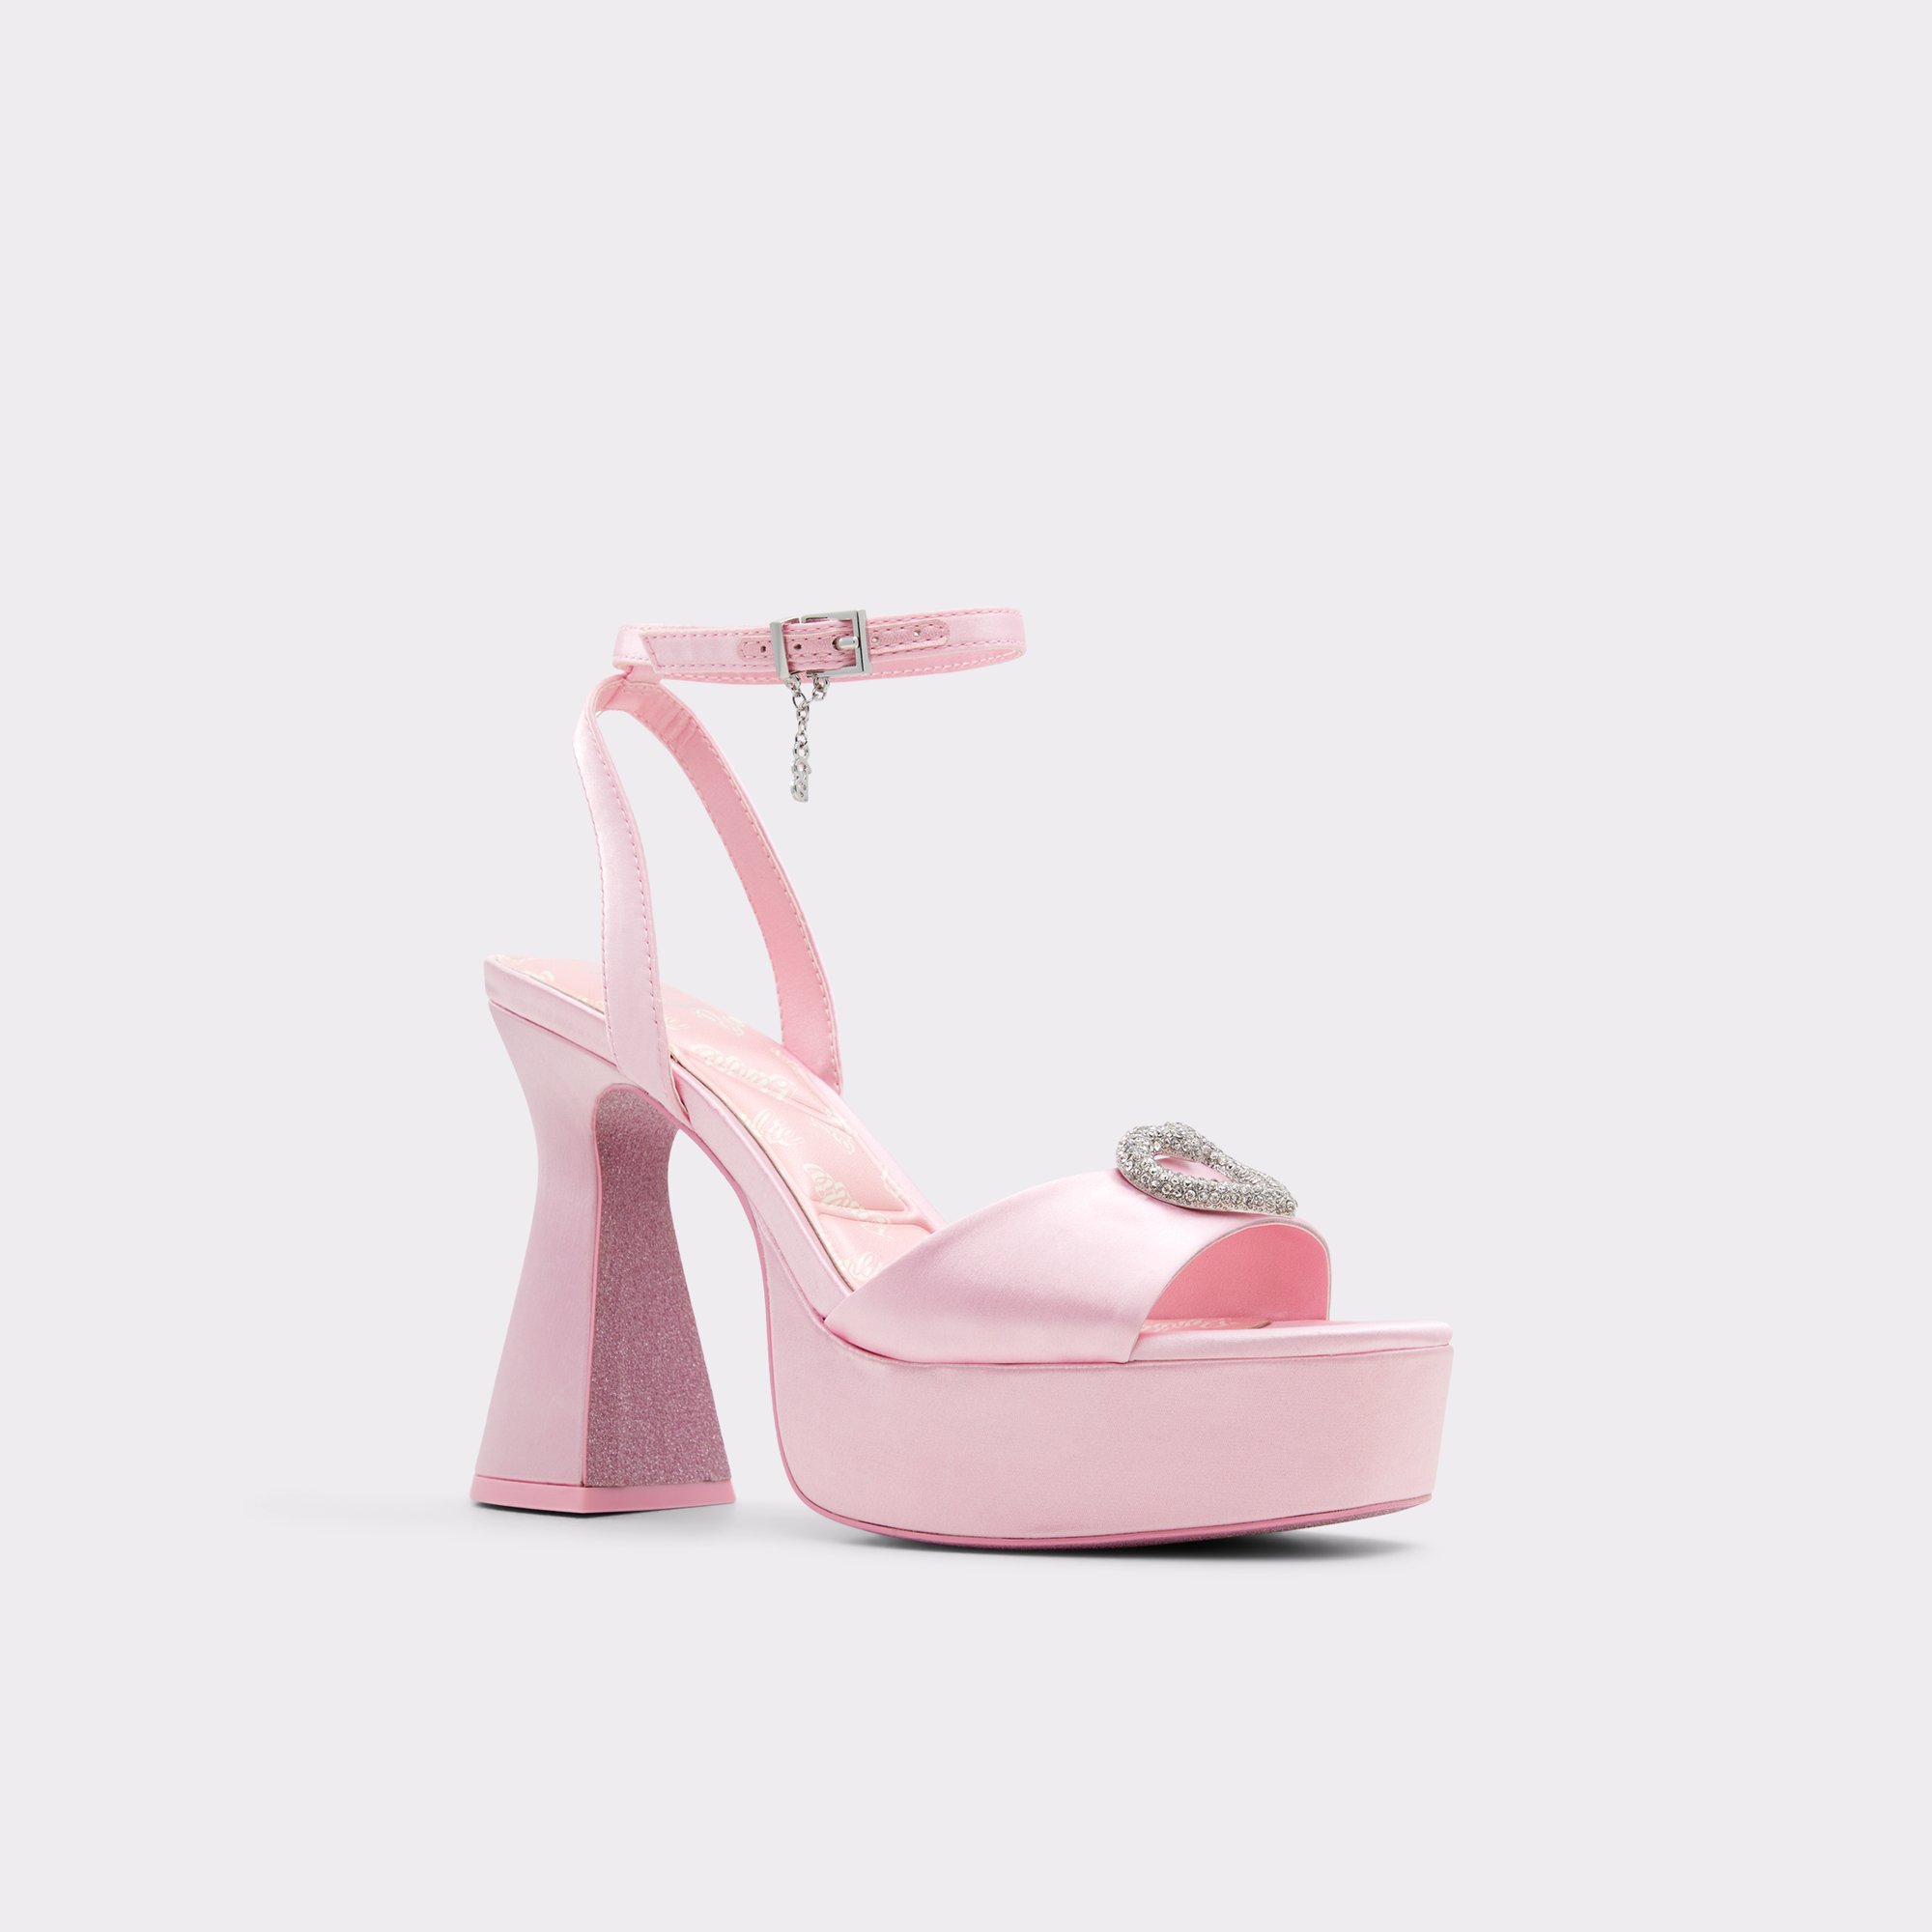 The ALDO x Barbie Collection Has Hot Pink Heels